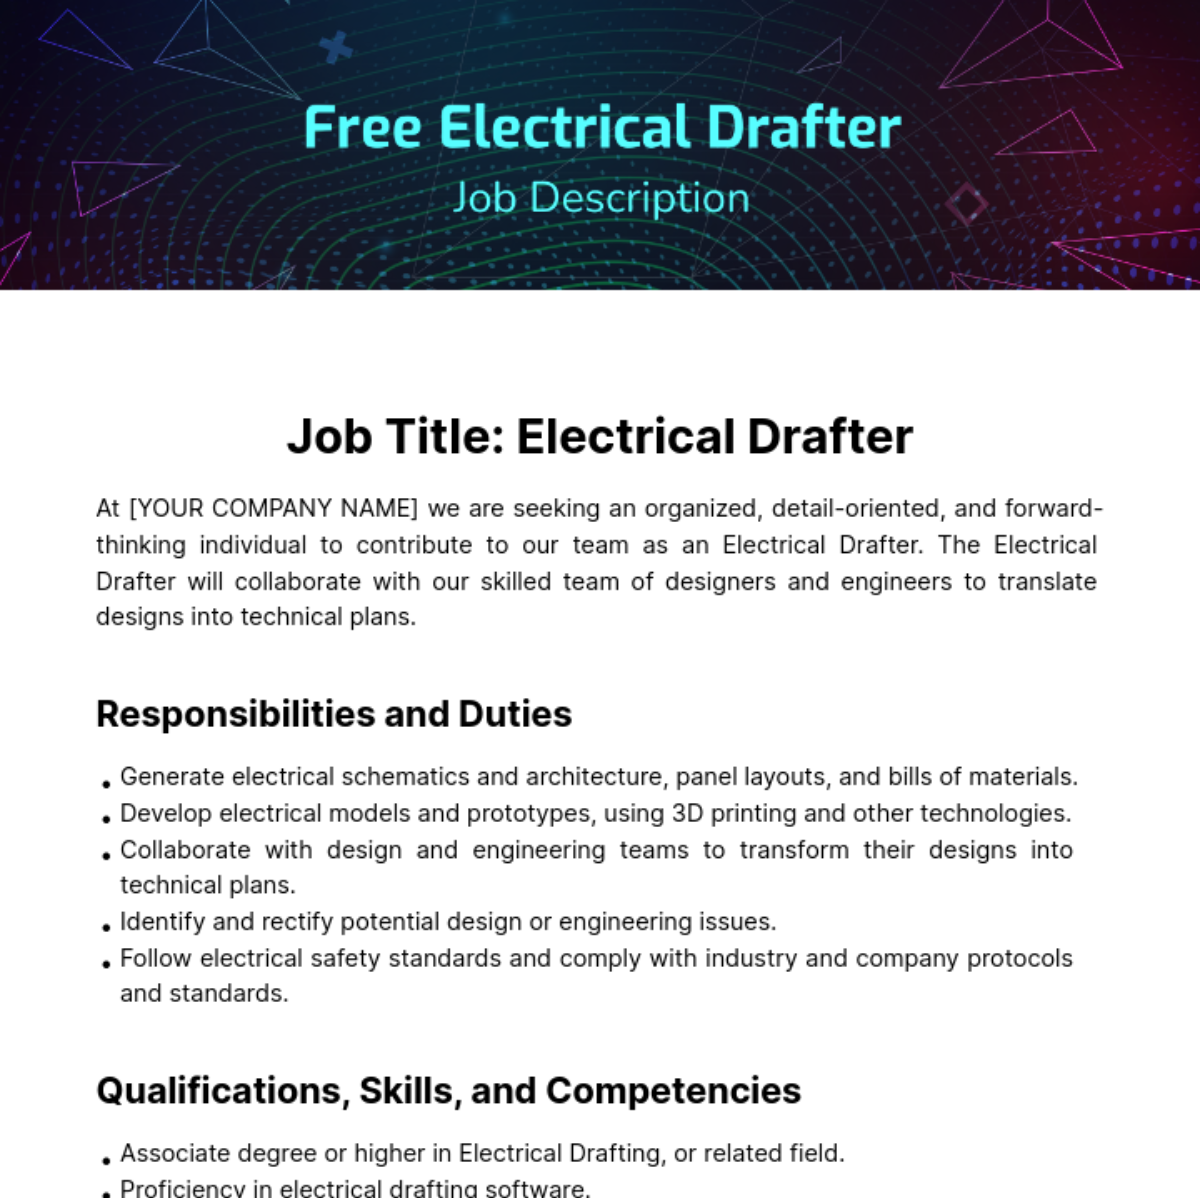 Electrical Drafter Job Description Template